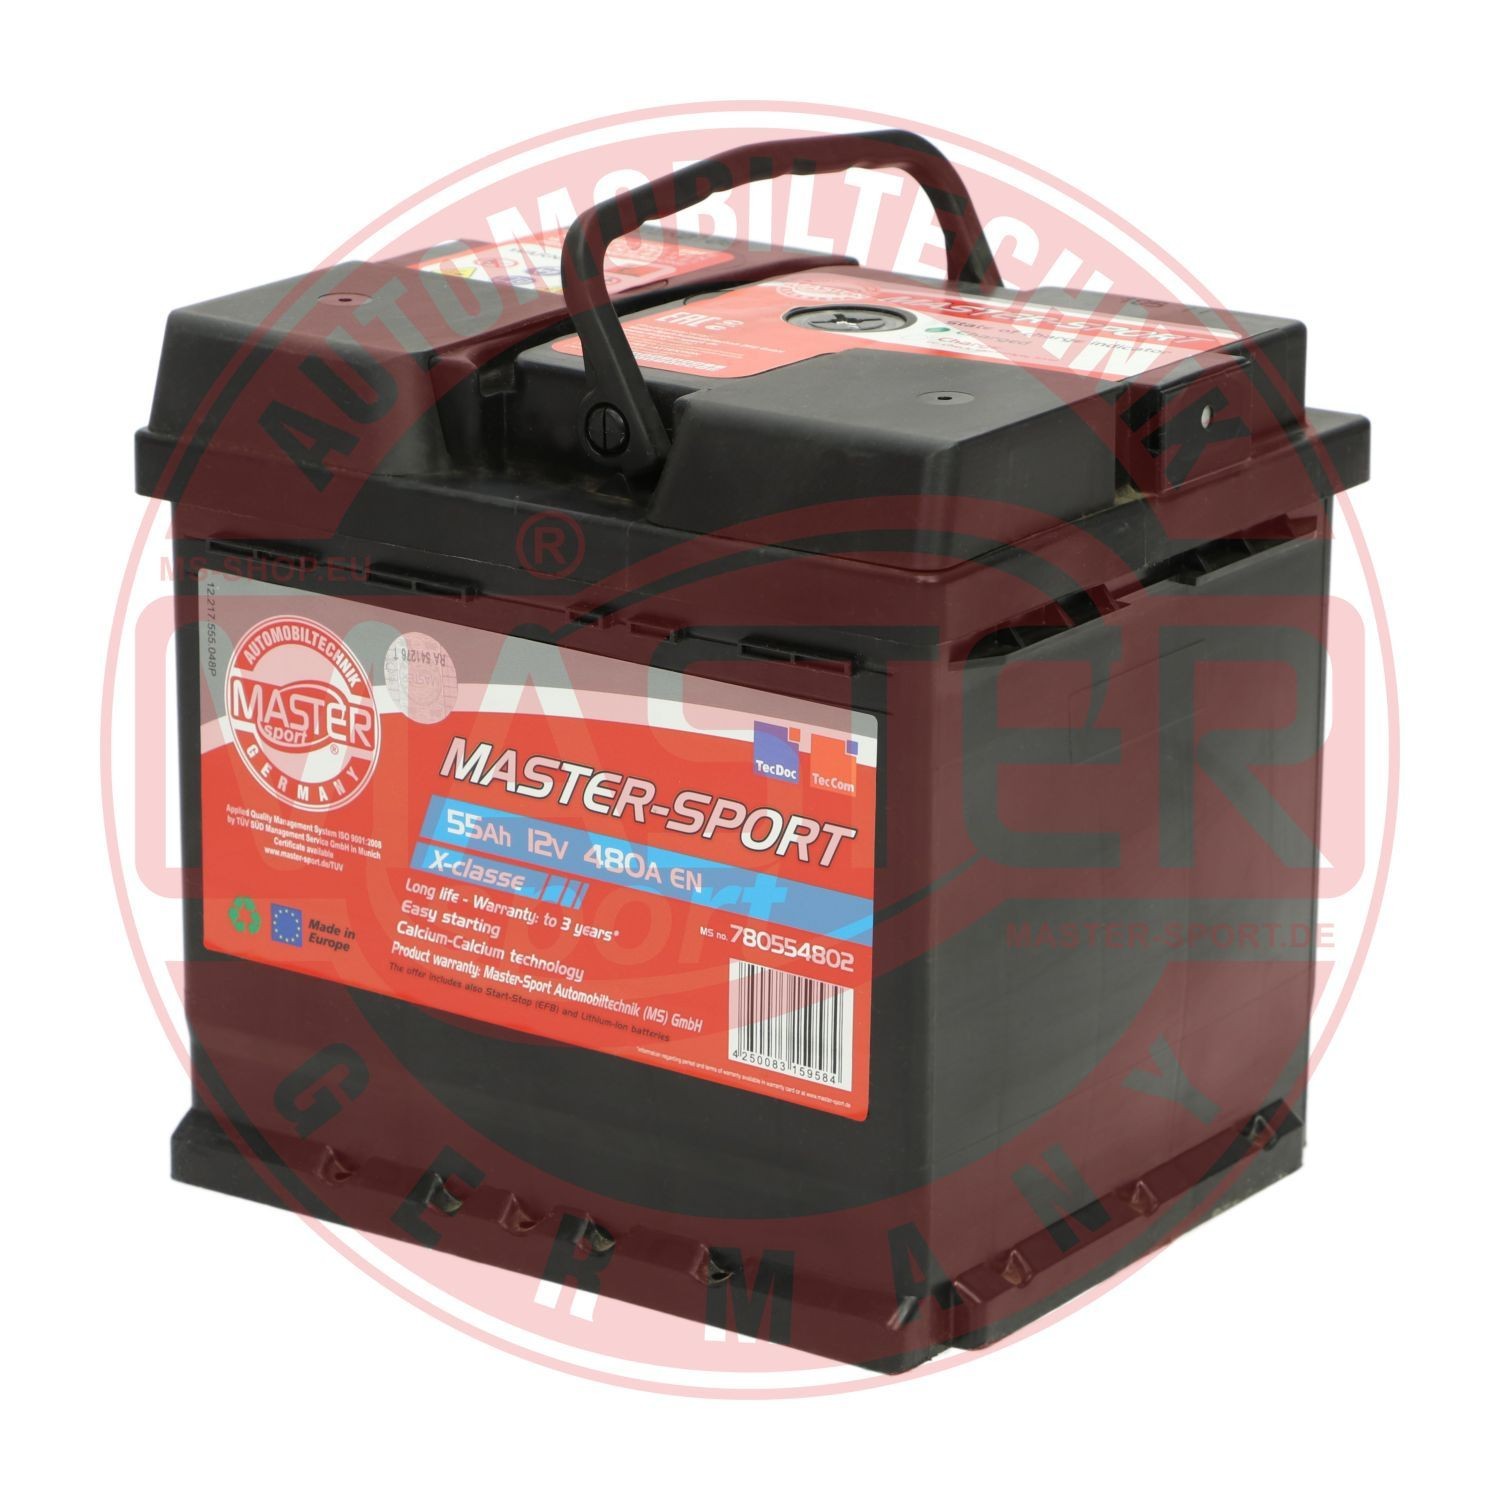 Great value for money - MASTER-SPORT Battery 780554802